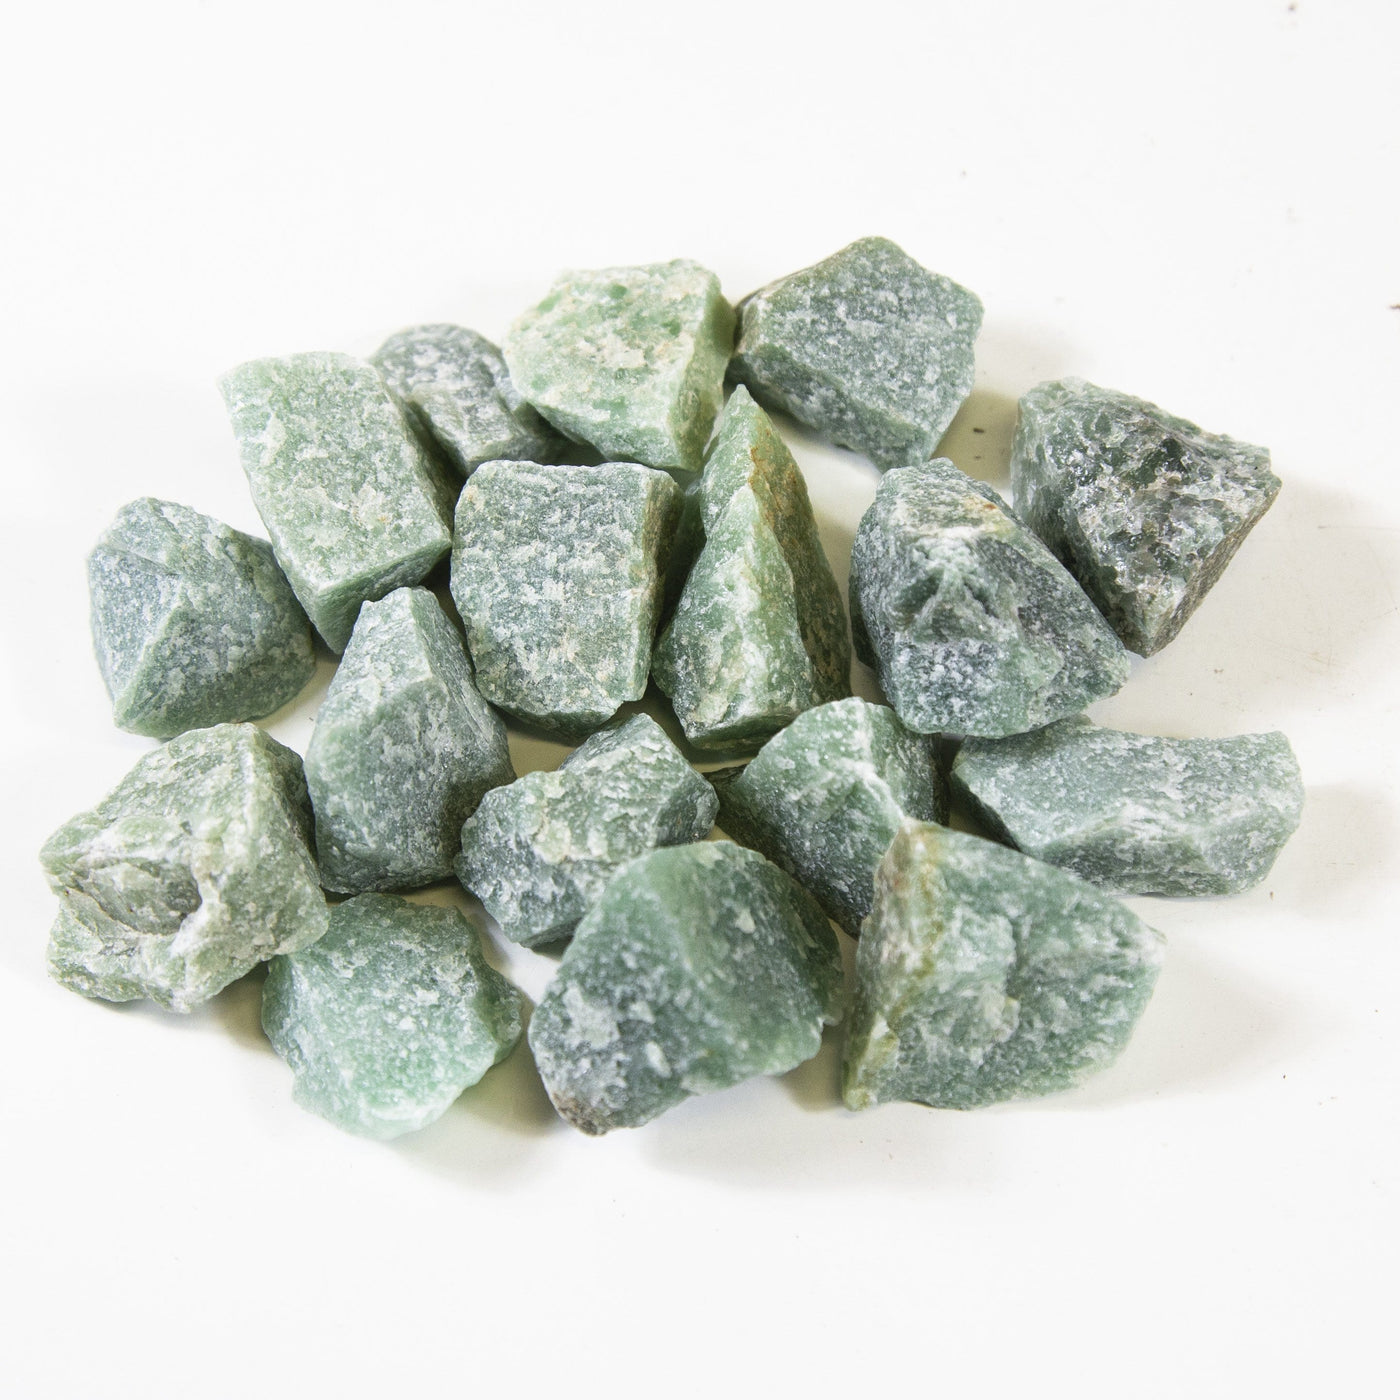 1 lb of Green quartz Raw Chunks Rough Stones displayed on white background